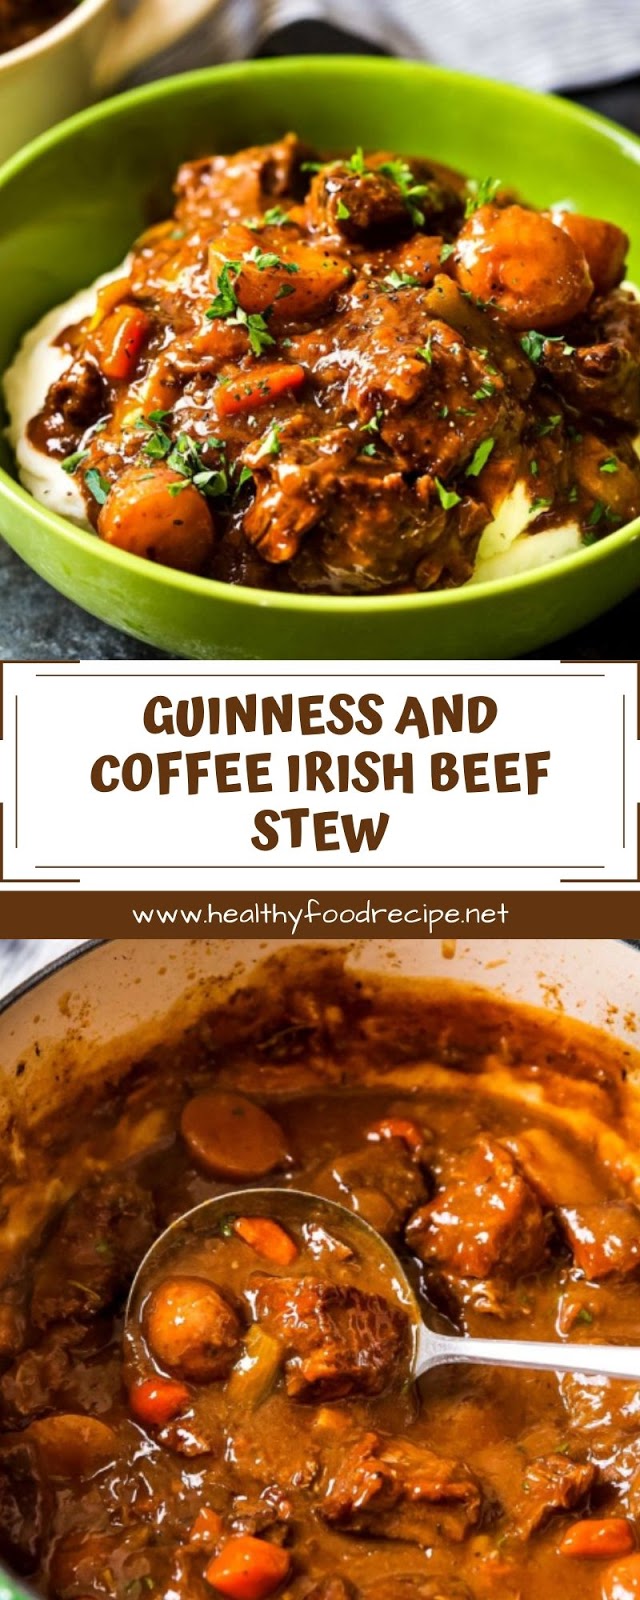 GUINNESS AND COFFEE IRISH BEEF STEW